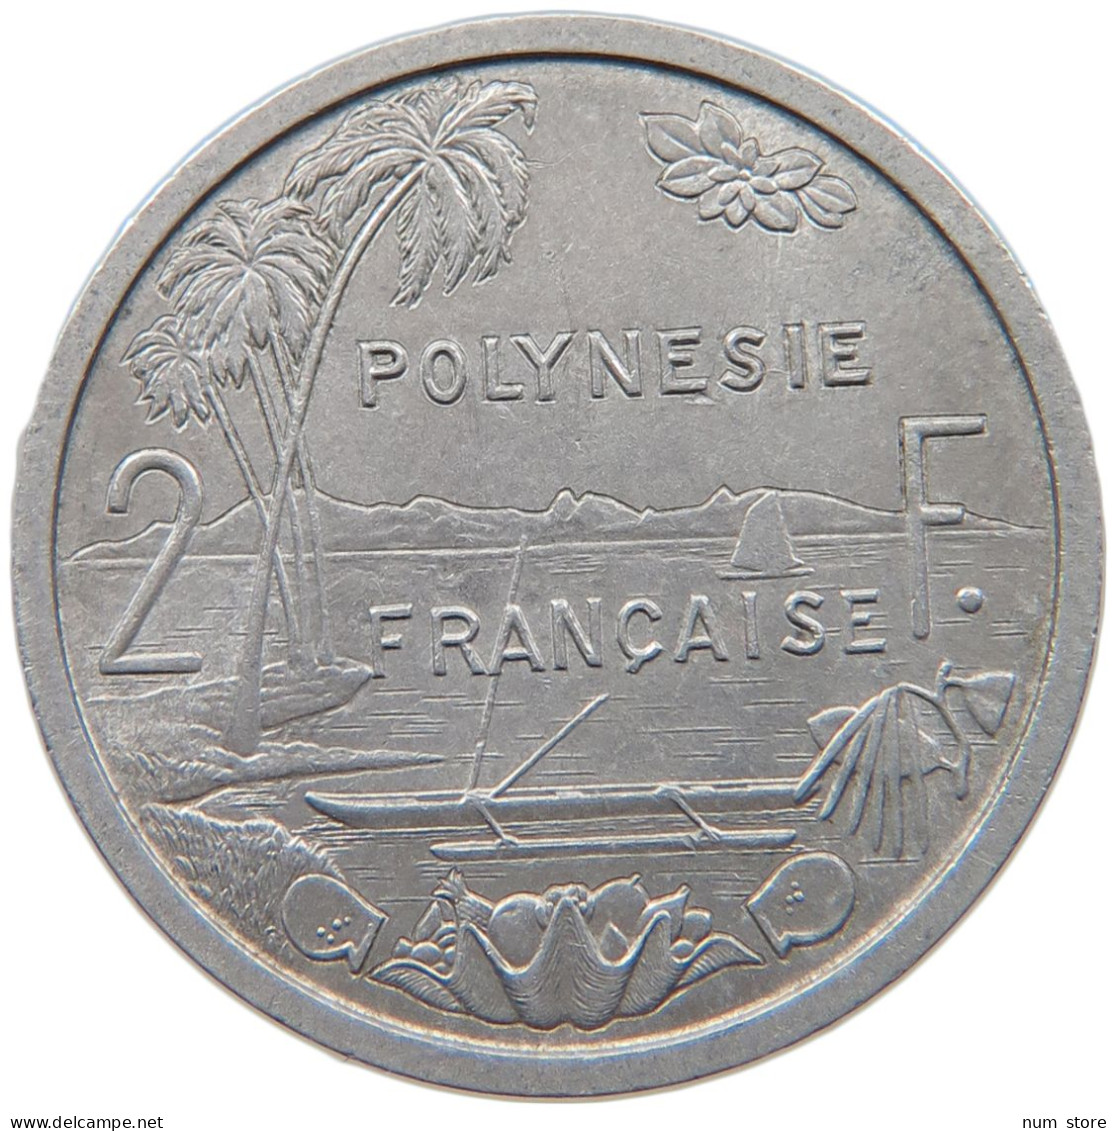 FRENCH POLYNESIA 2 FRANCS 1965 #s098 0235 - Französisch-Polynesien